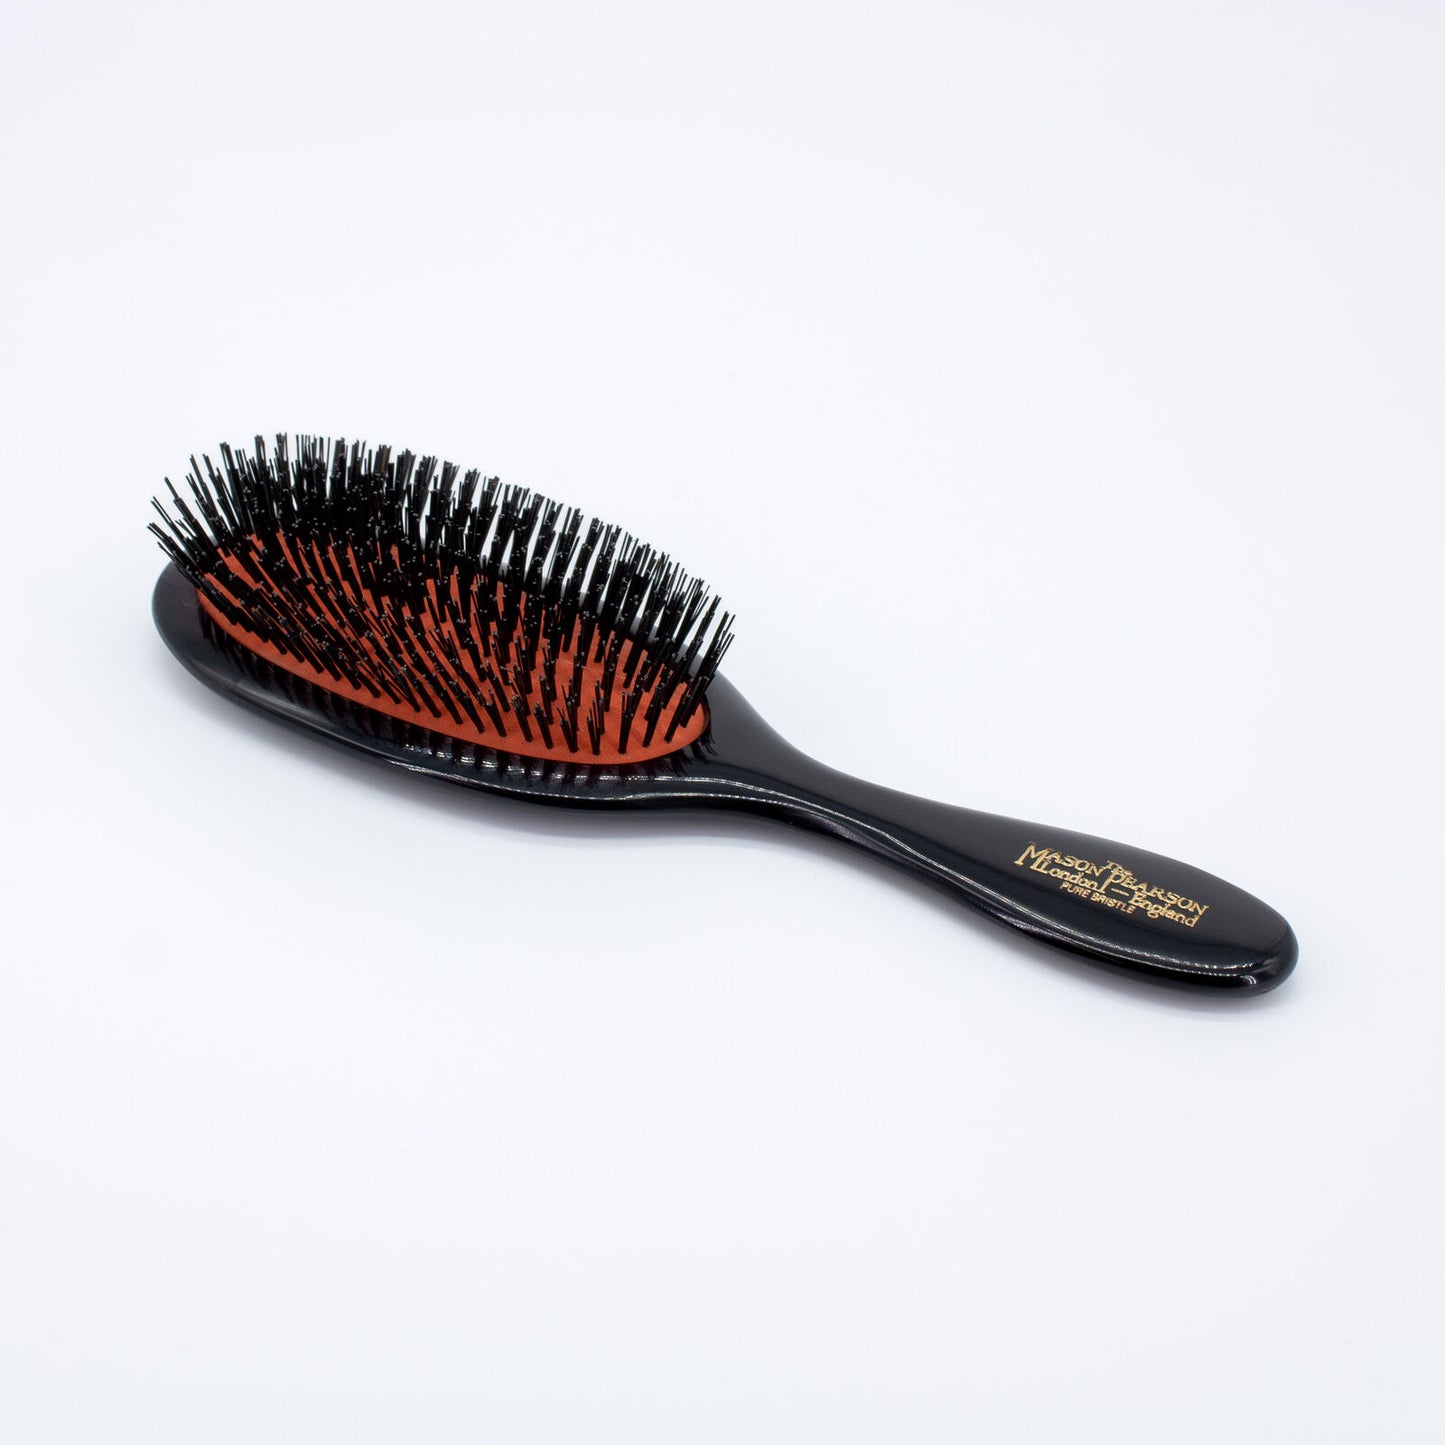 MASON PEARSON Handy Bristle Hairbrush B3 DARK RUBY - Imperfect Box